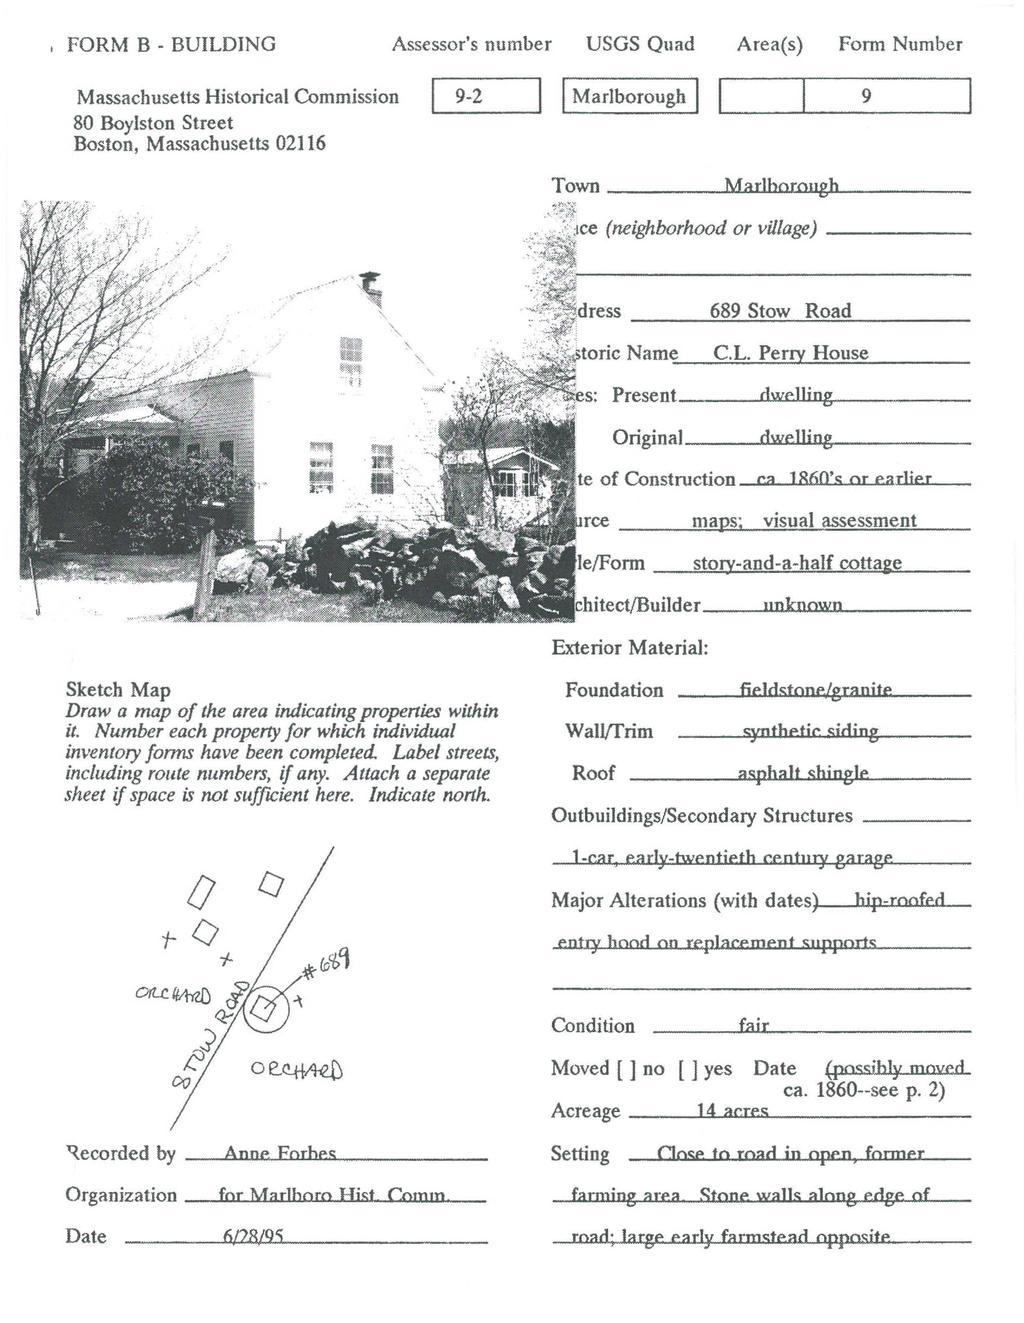 I FORM B - BUILDING Assessor's number USGS Quad Area(s) Form Number Massachusetts Historical Commission 1..._9_-_2 1 I Marlborough I 80 Boylston Street Boston, Massachusetts 02116 9 '/.